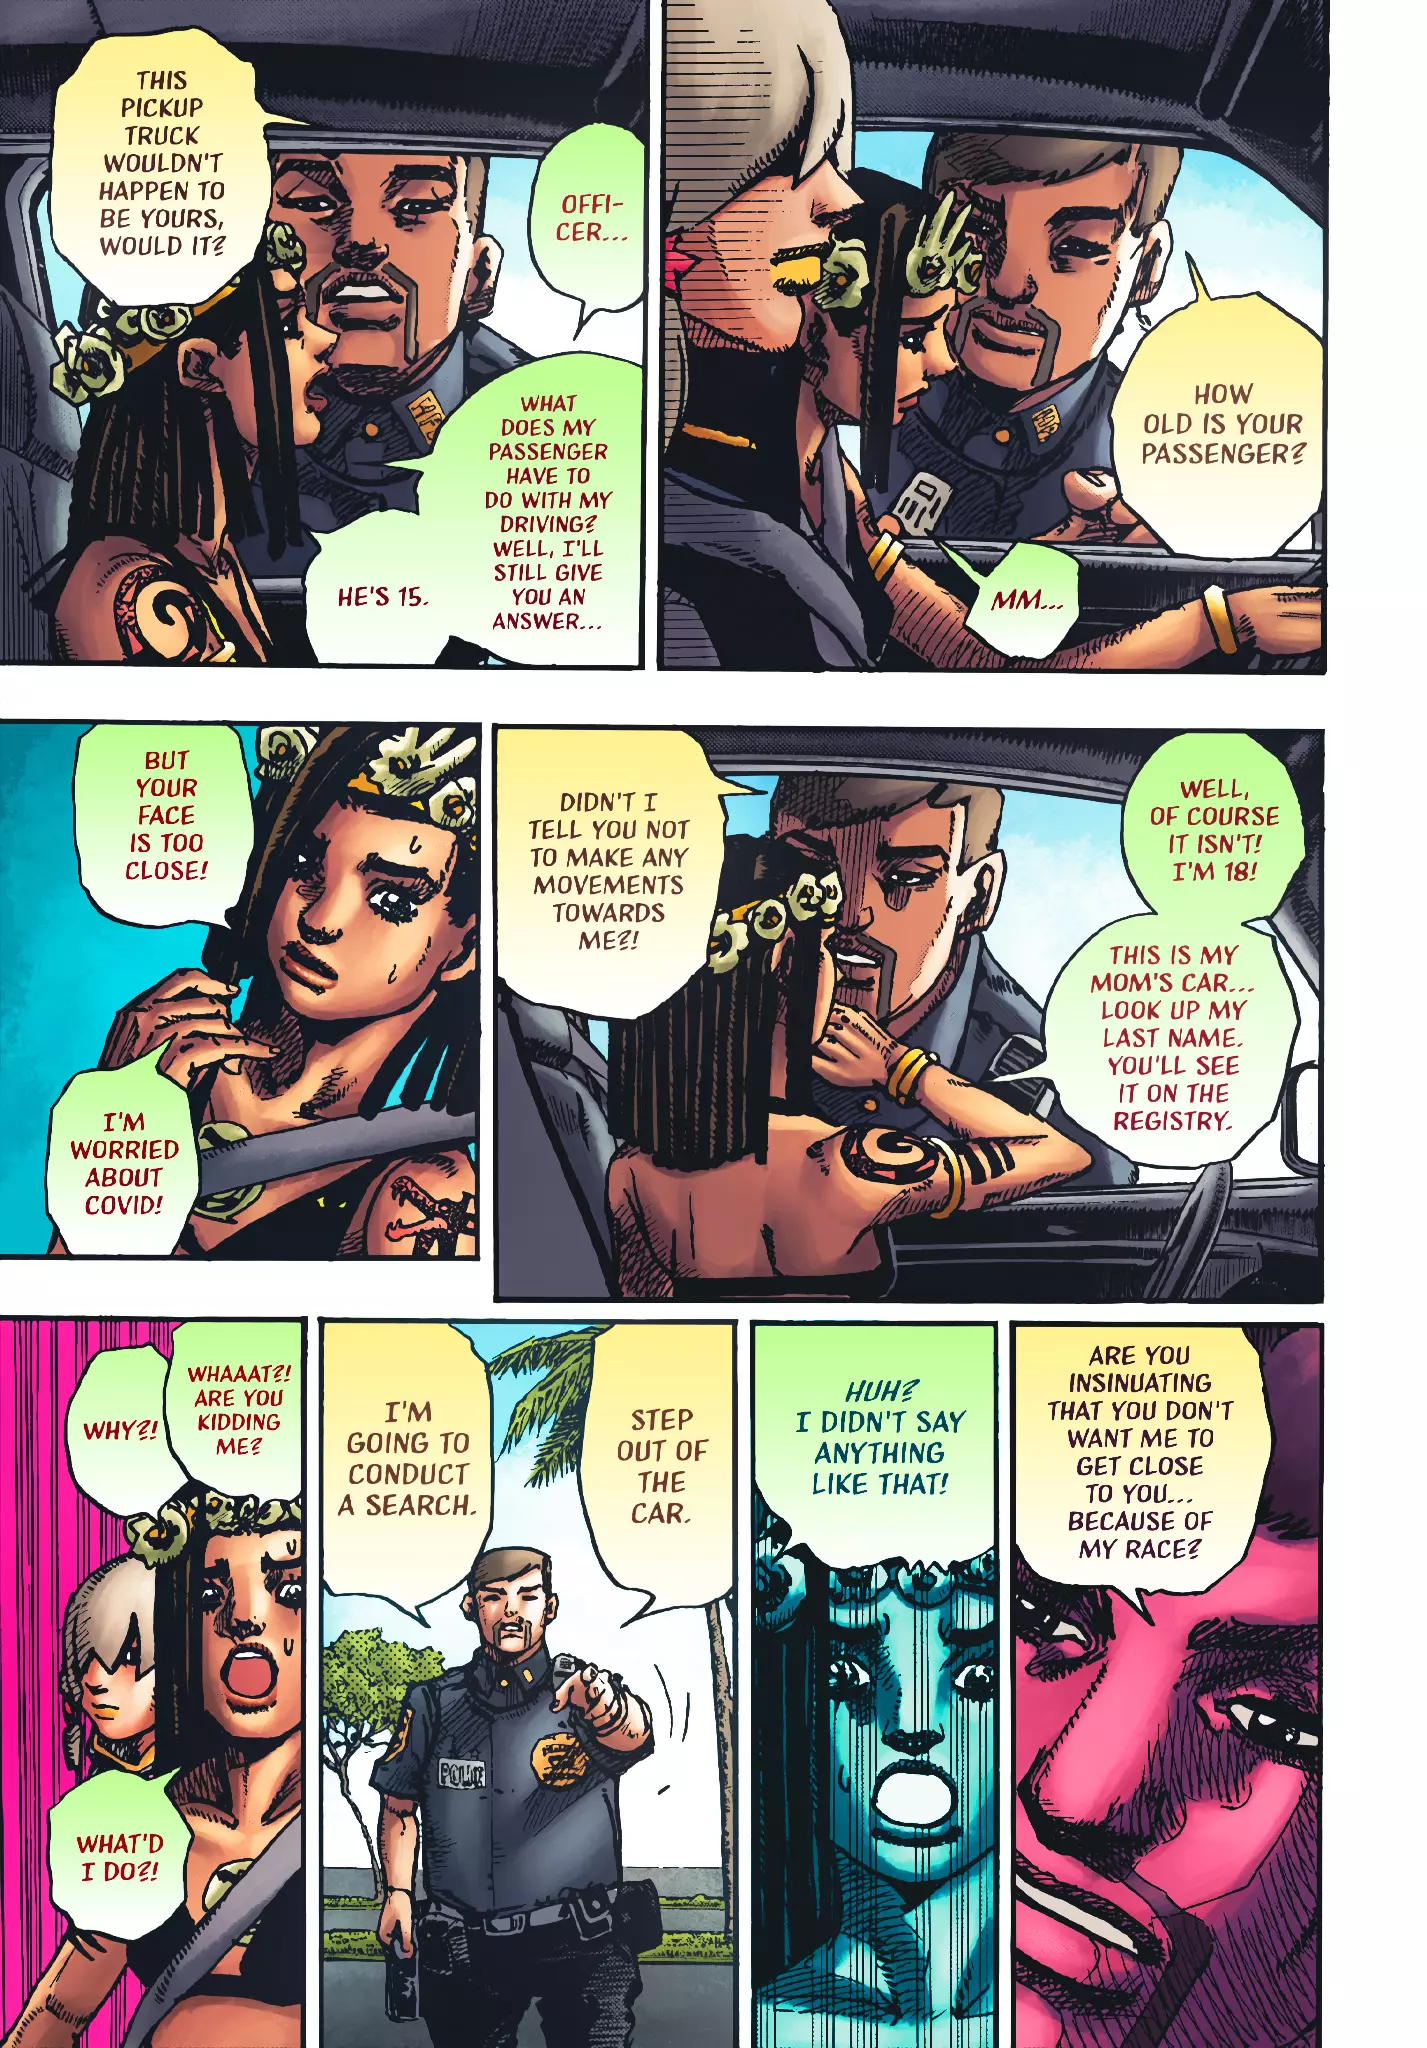 Jojo's Bizarre Adventure Part 9 - The Jojolands (Fan-Colored) - 1 page 11-6a64d5f5